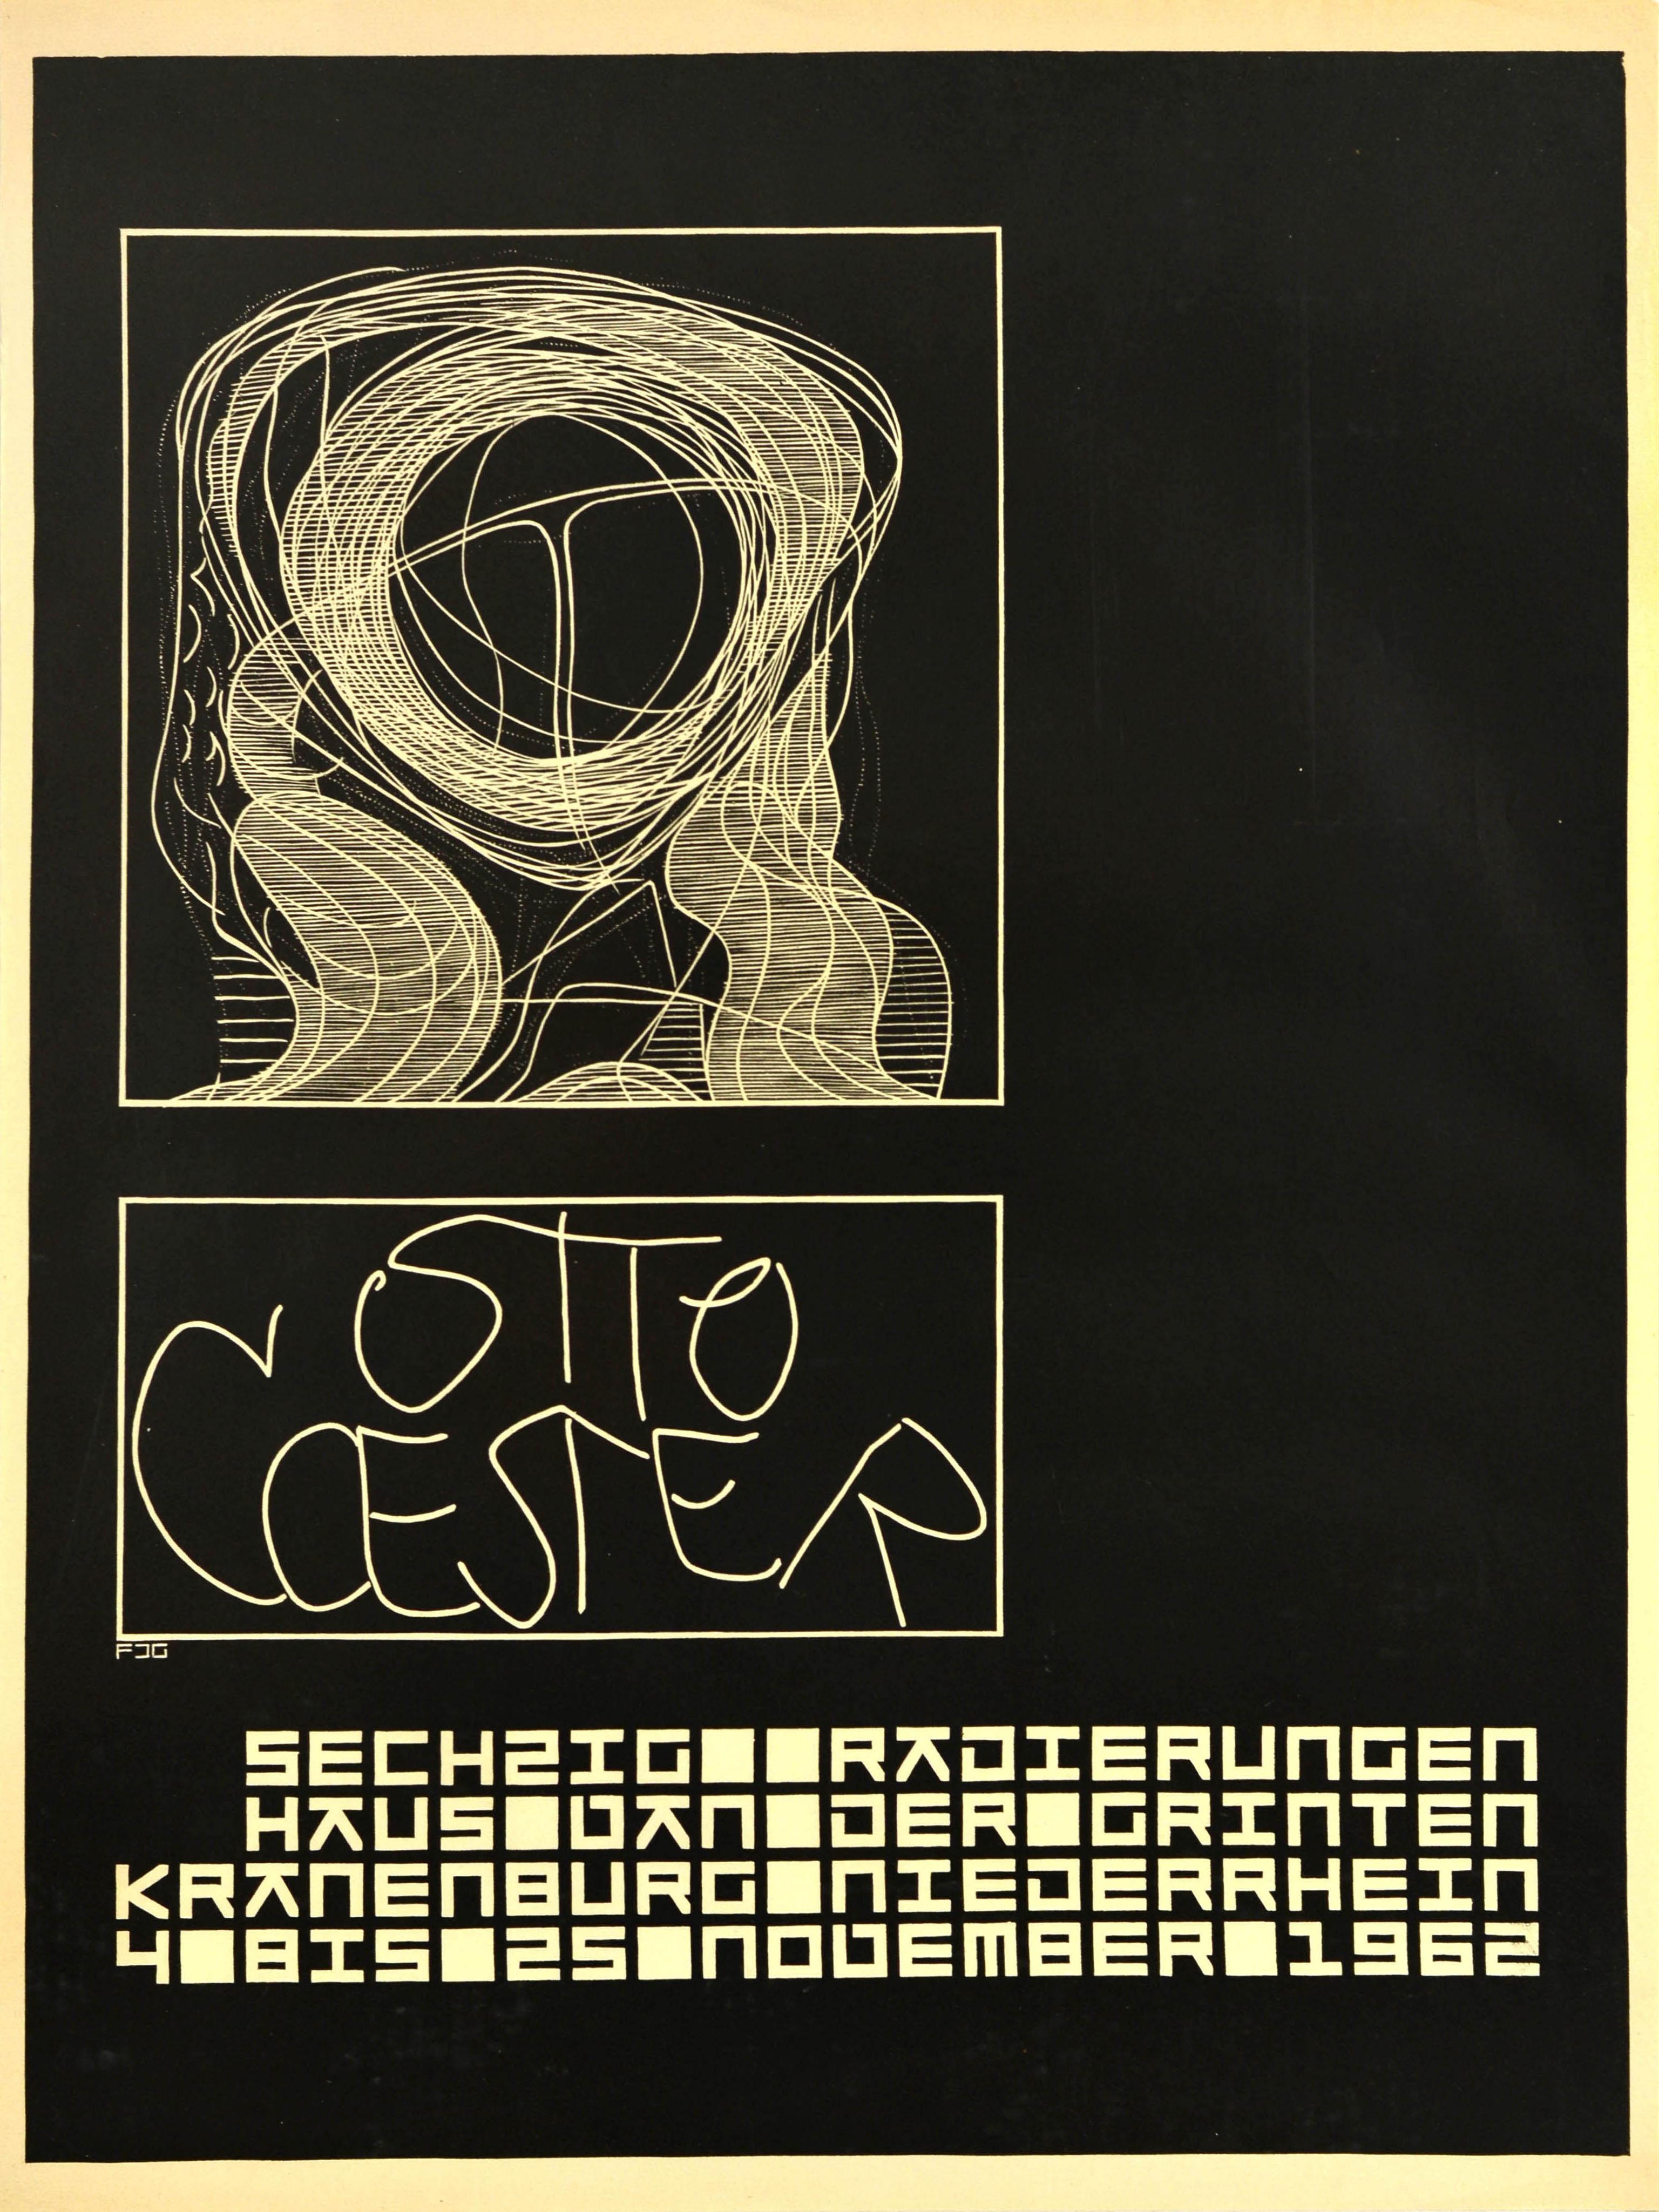 Original vintage advertising poster - Otto Coester Sechzig Raderungen / 60 Etchings art exhibition at Haus Van Der Grinten Kranenburg Niederrhein from 4 to 25 November 1962 featuring an abstract design in circular lines and wavy shapes on a black